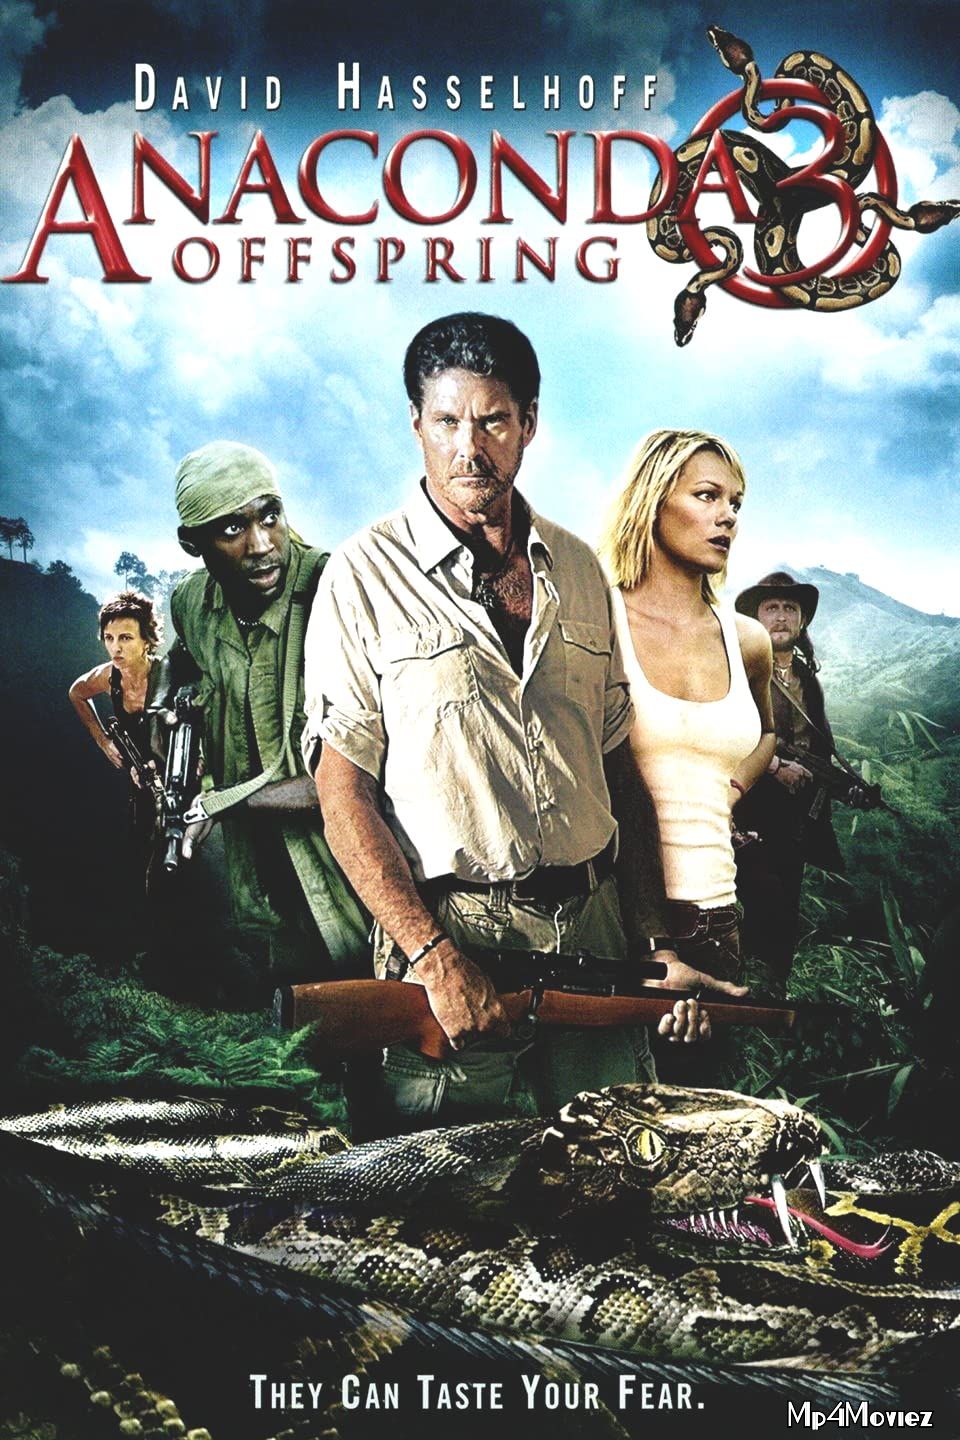 Anaconda 3 Offspring 2008 Hindi Dubbed Full Movie download full movie